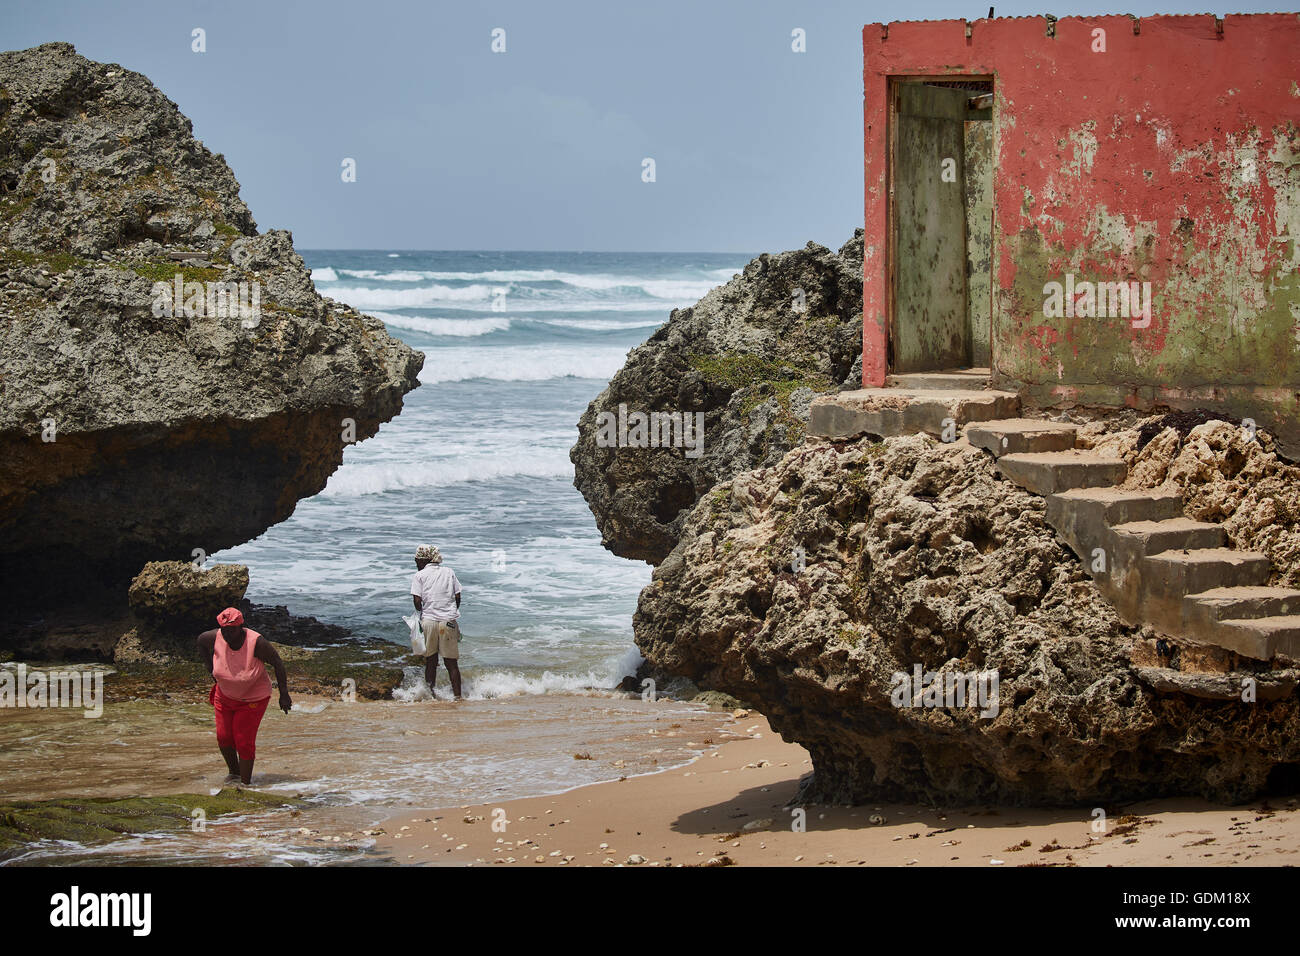 Le Piccole Antille Barbados parrocchia Saint Michael west indies capitale Bridgetown Barbados spiaggia di sabbia dorata con grande pietra ro Foto Stock